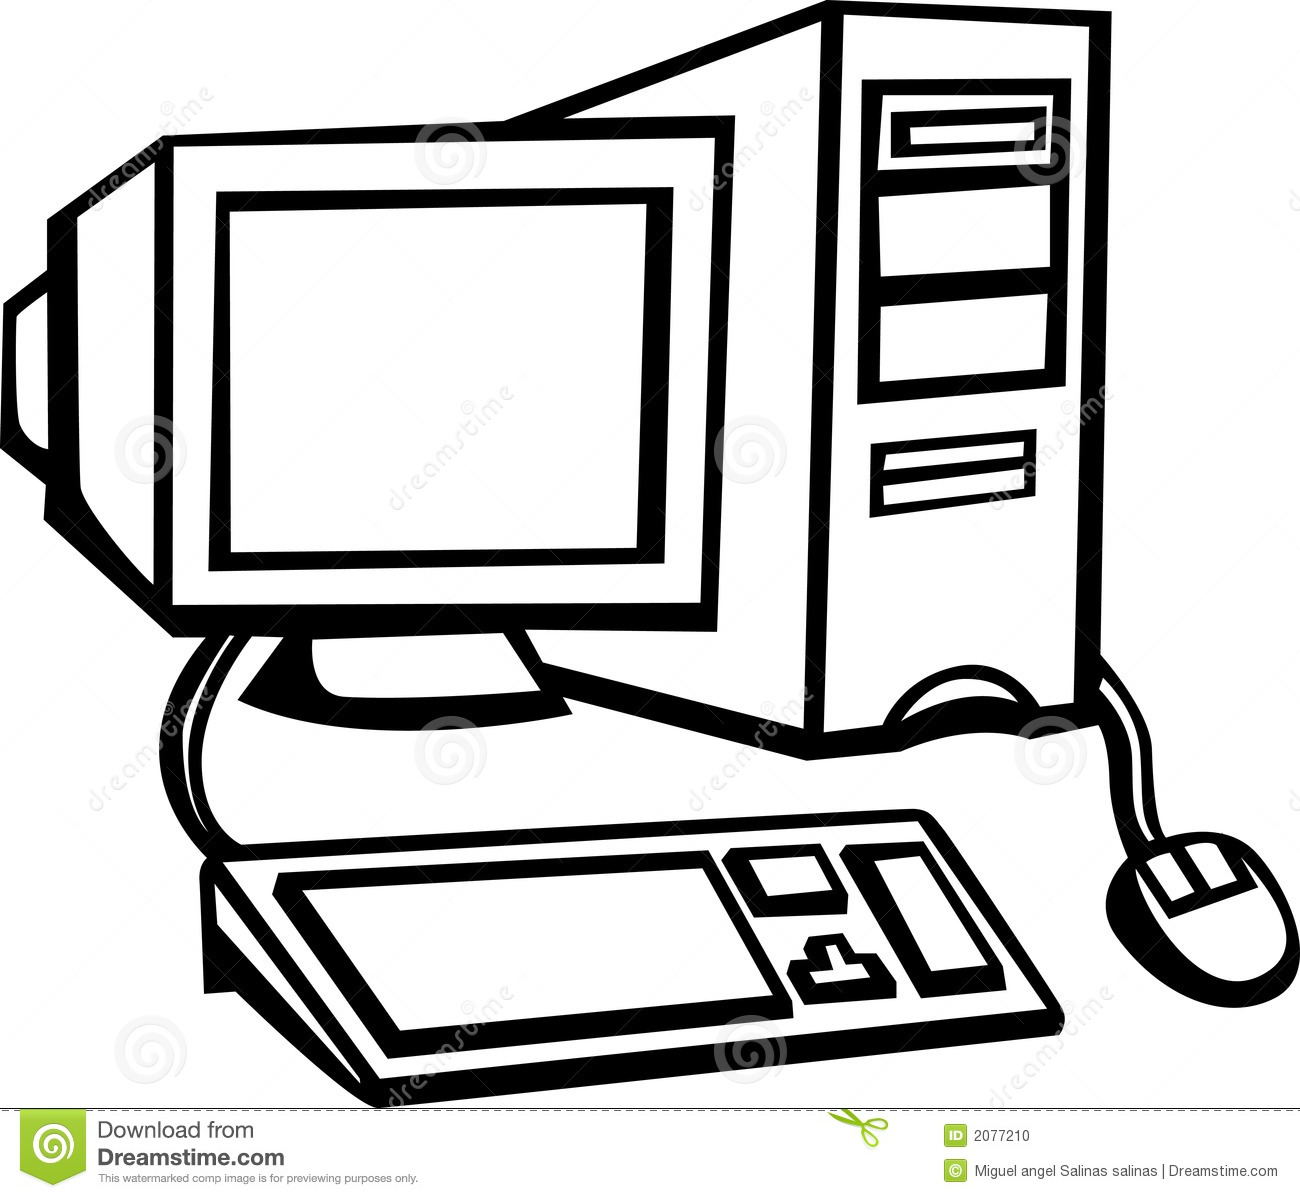 Desktop Computer Vector Illustration Stock Photo   Image  2077210